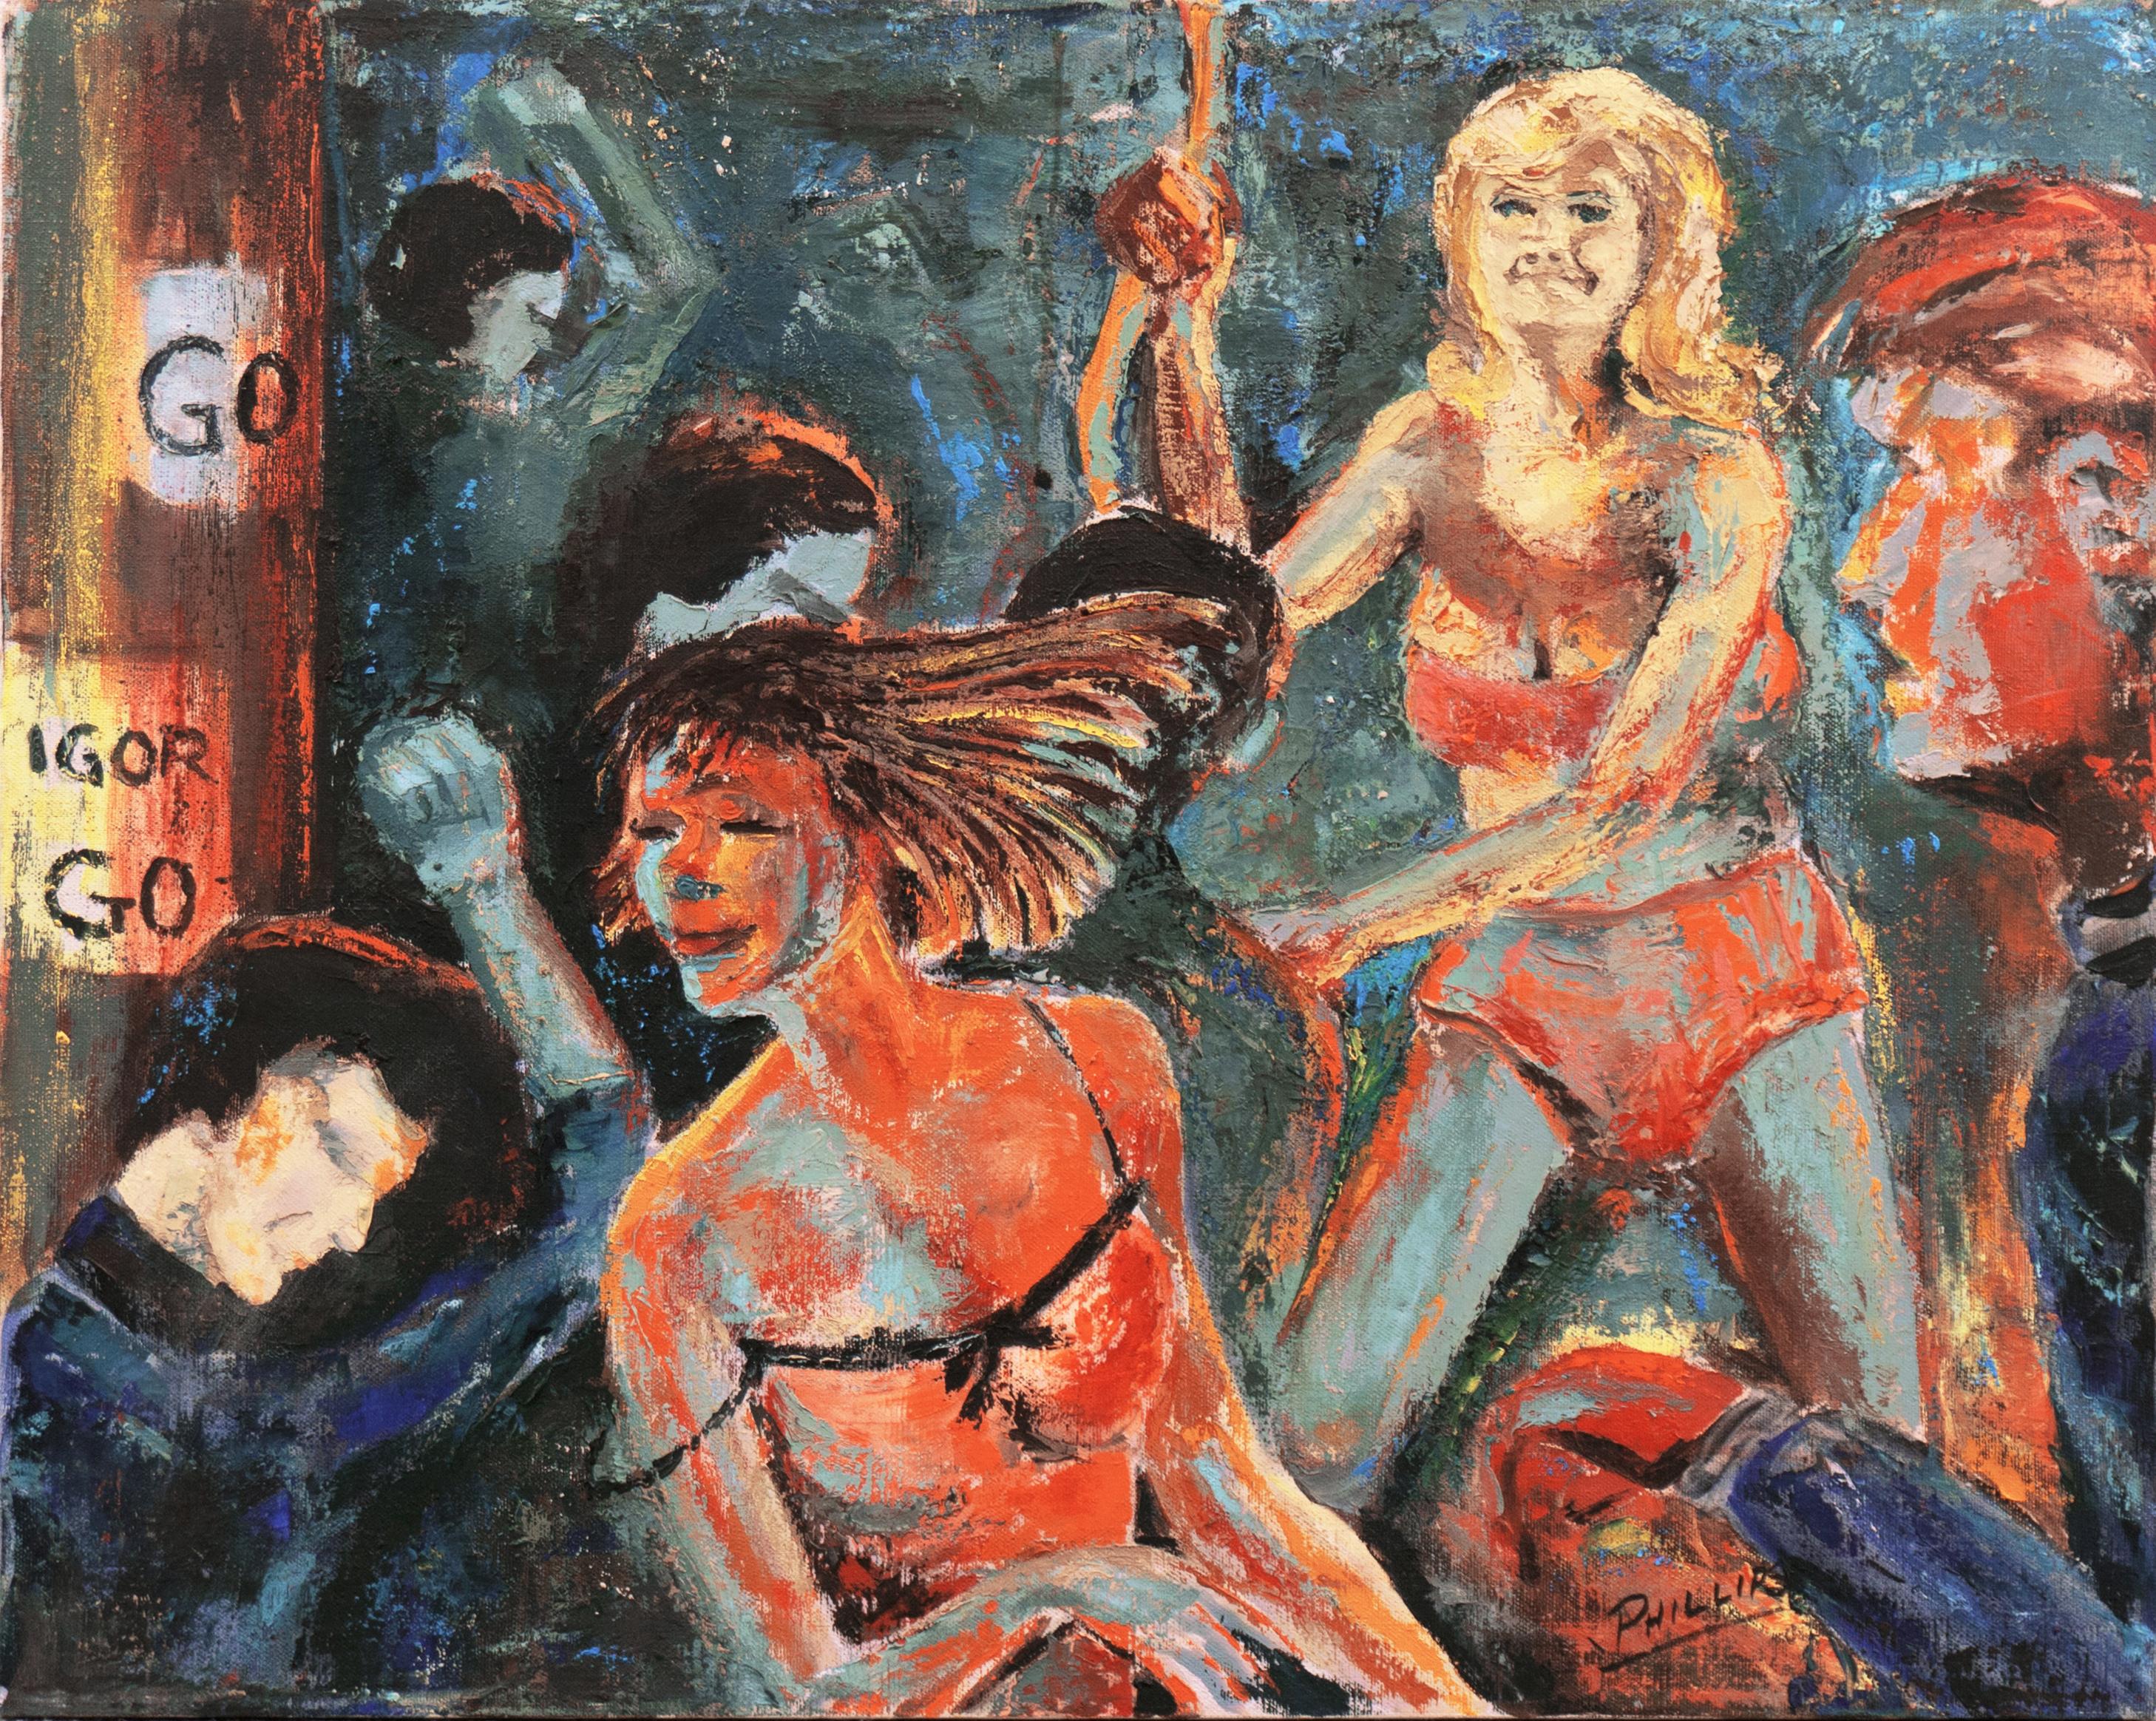 Dick Phillips Figurative Painting - 'Go, Igor, Go!', 1960's Night Club Go-Go Dancers, Large Post-Impressionist Oil